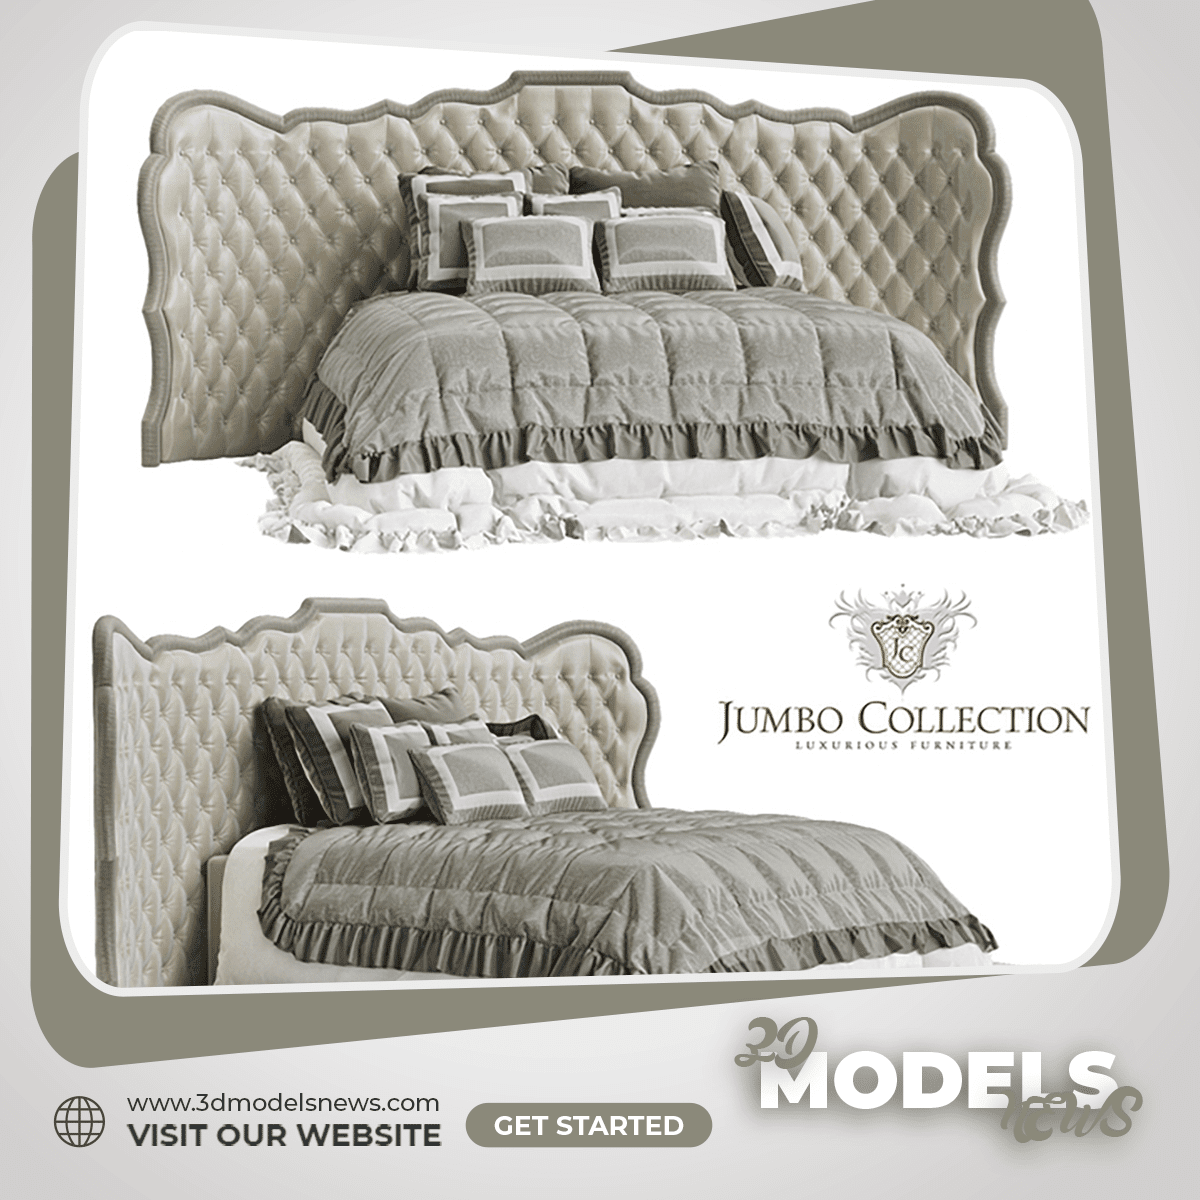 Jumbo Collection Fun Bed Model